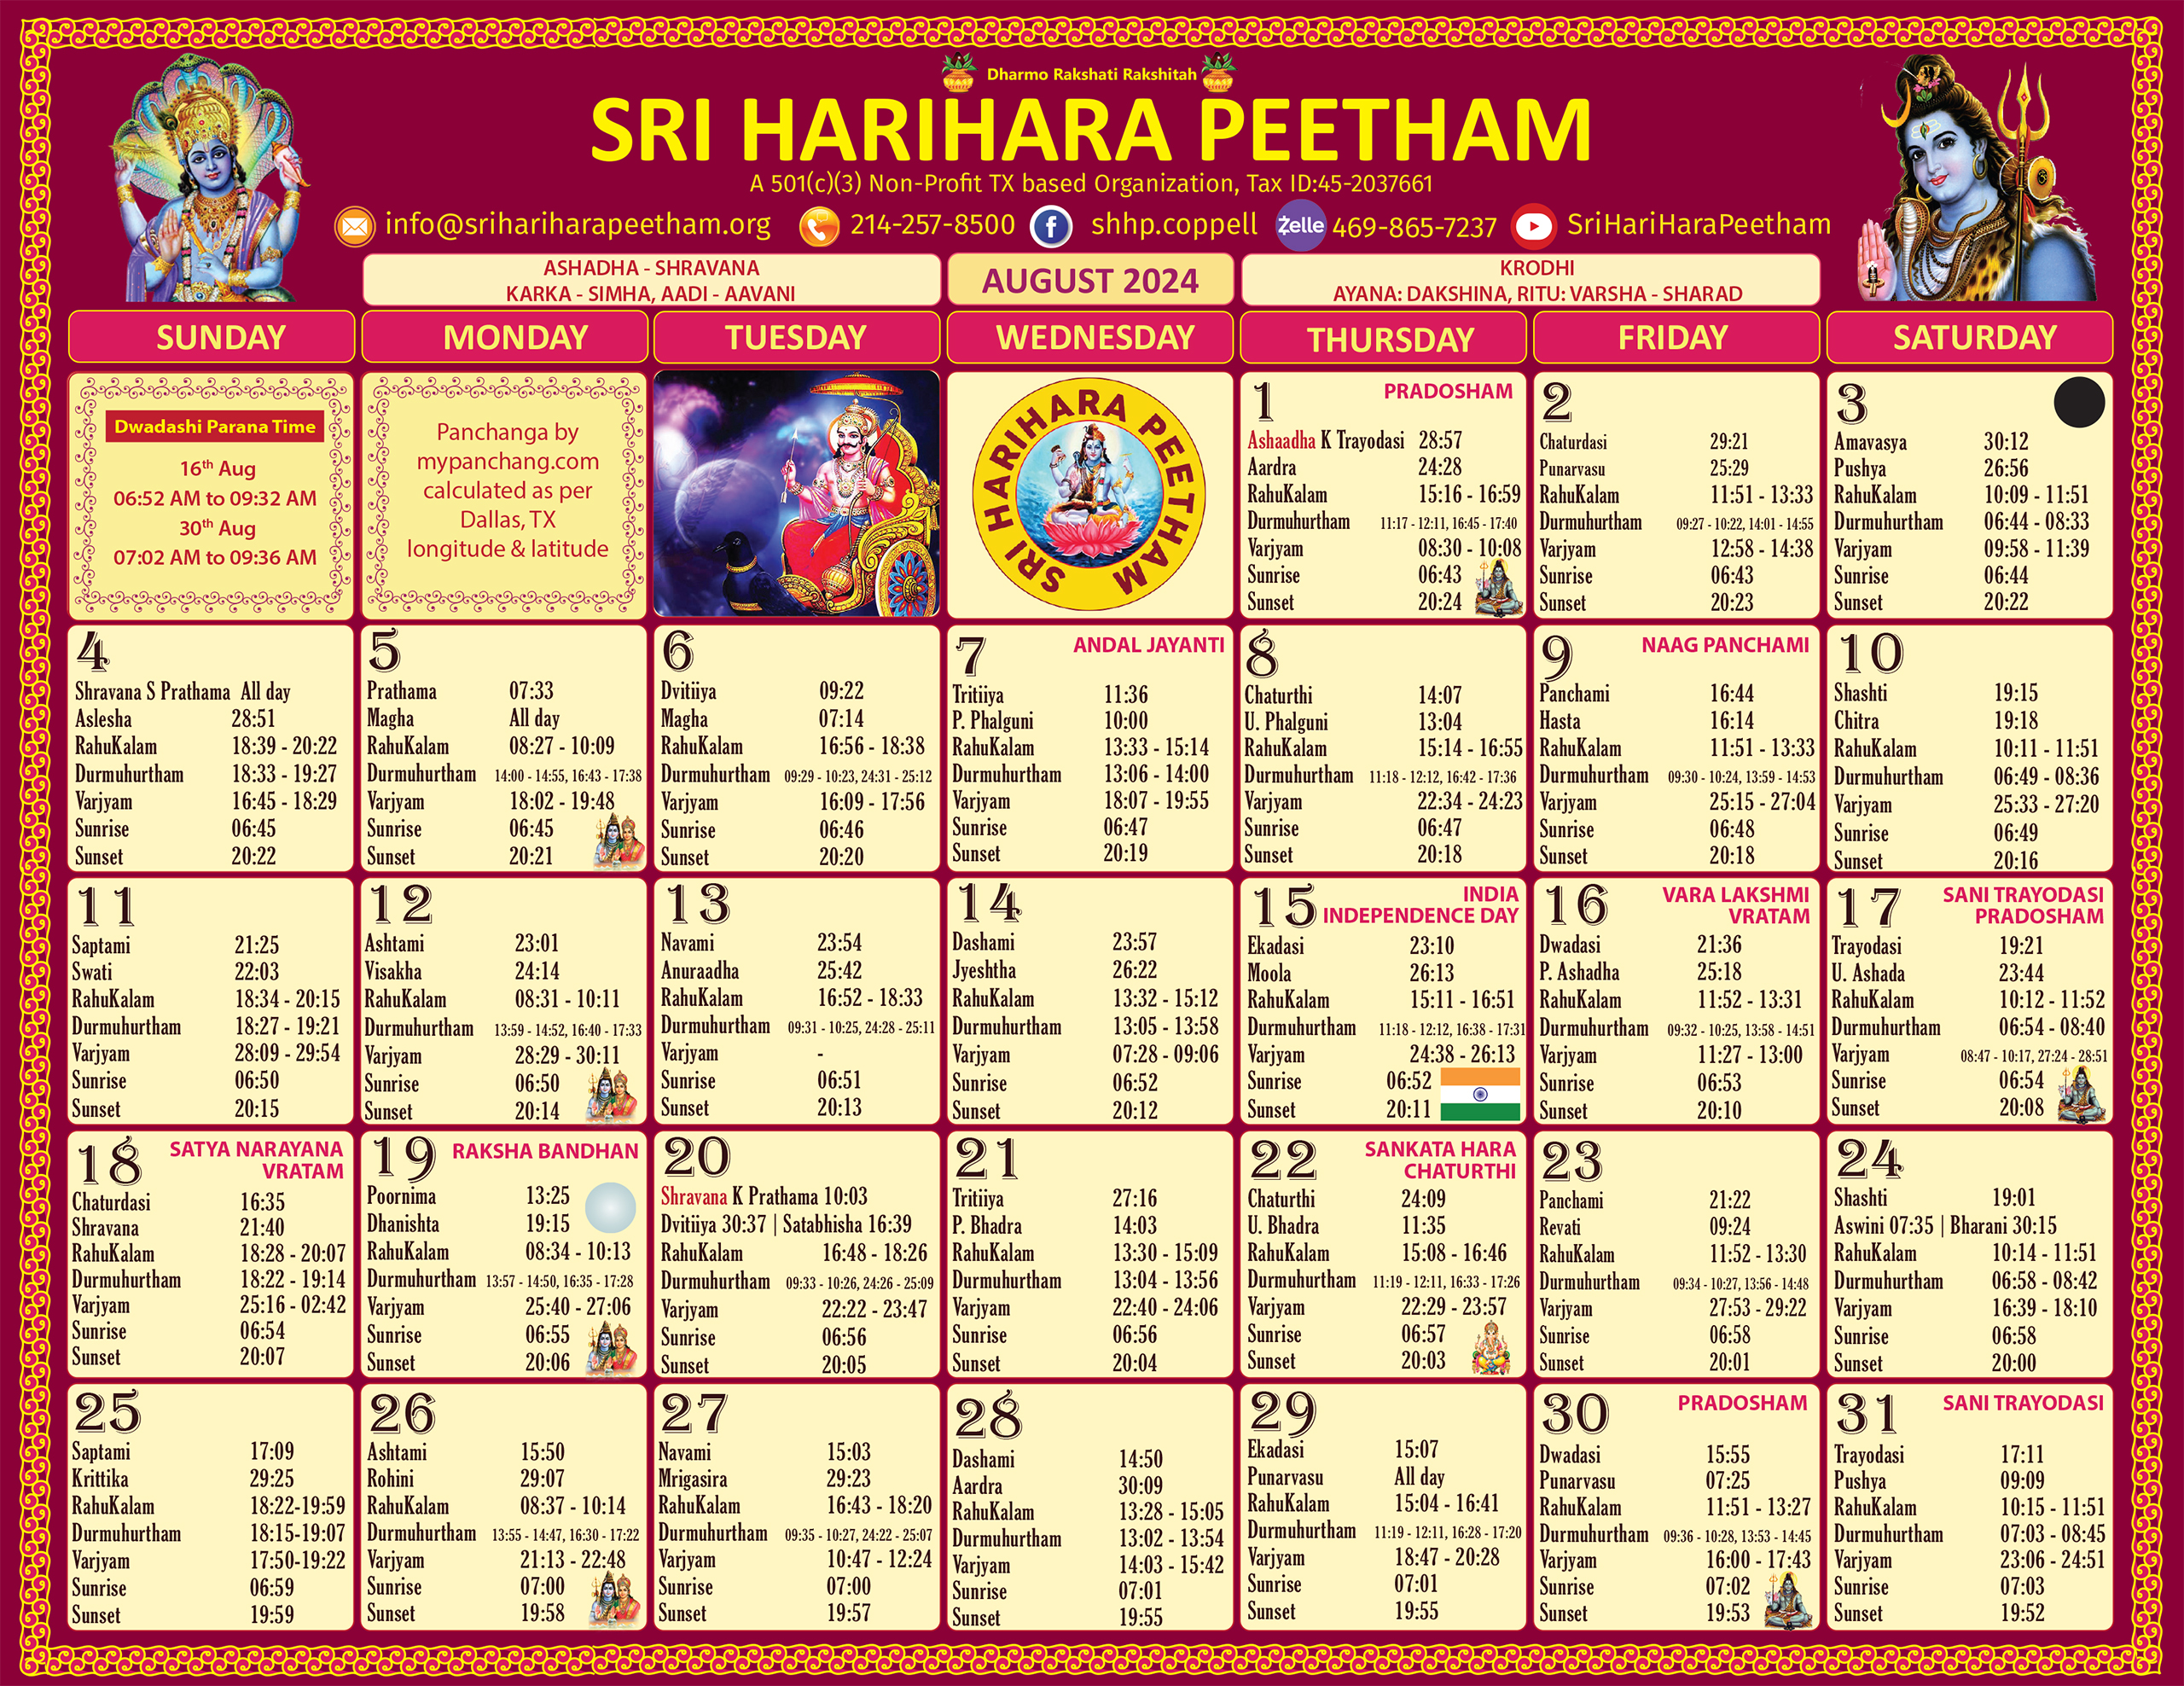 Sri HariHara Peetham's August 2024 calendar page